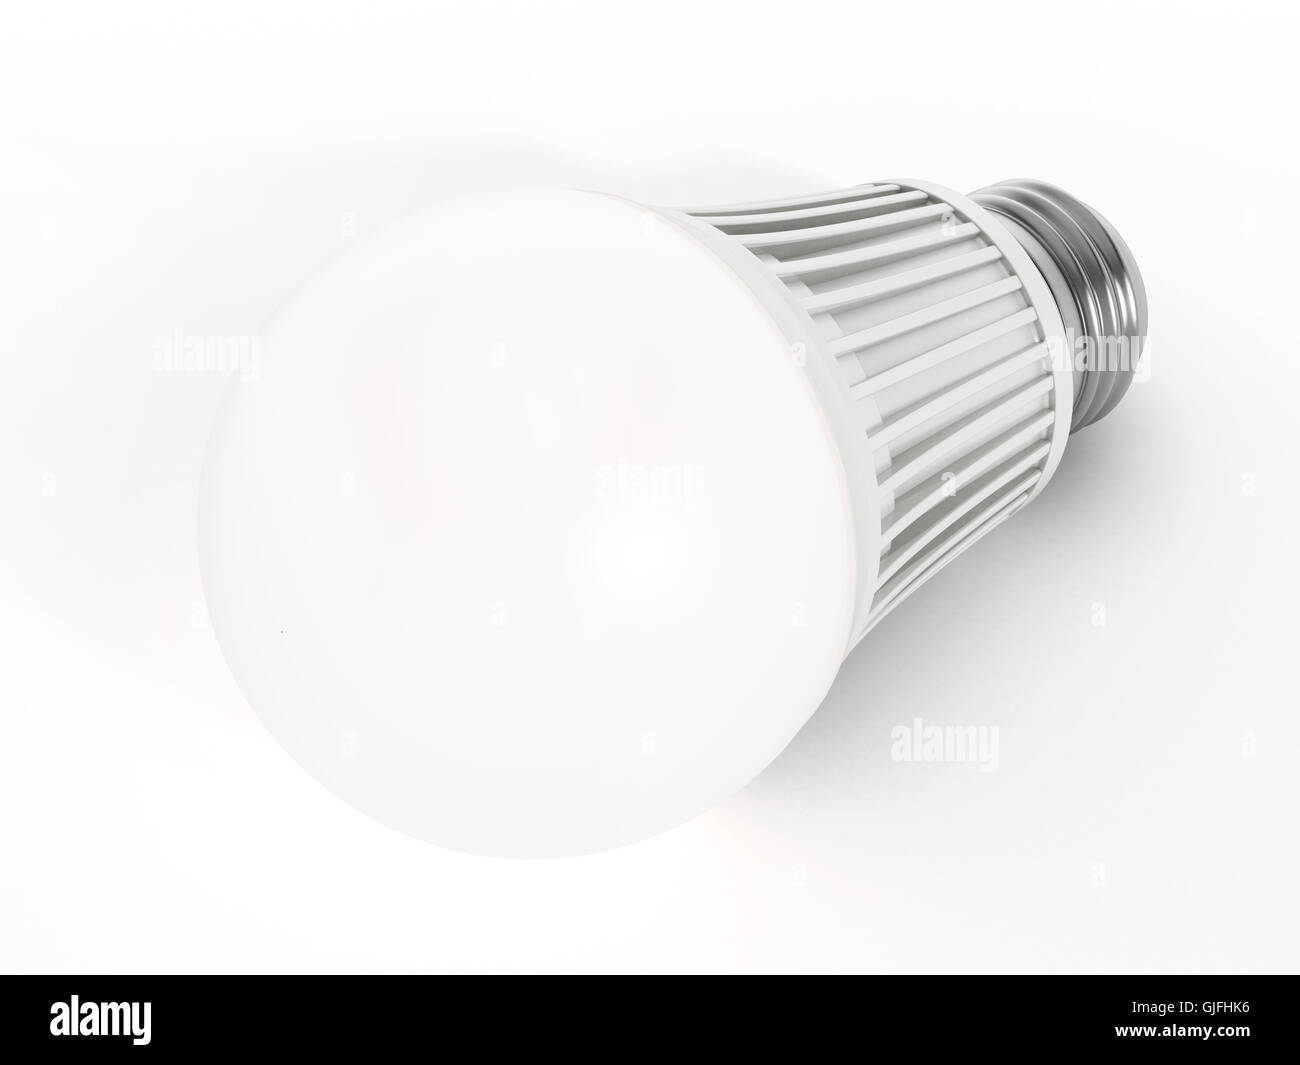 Energy efficient light bulb isolated on white background. 3d illustration. Stock Photo